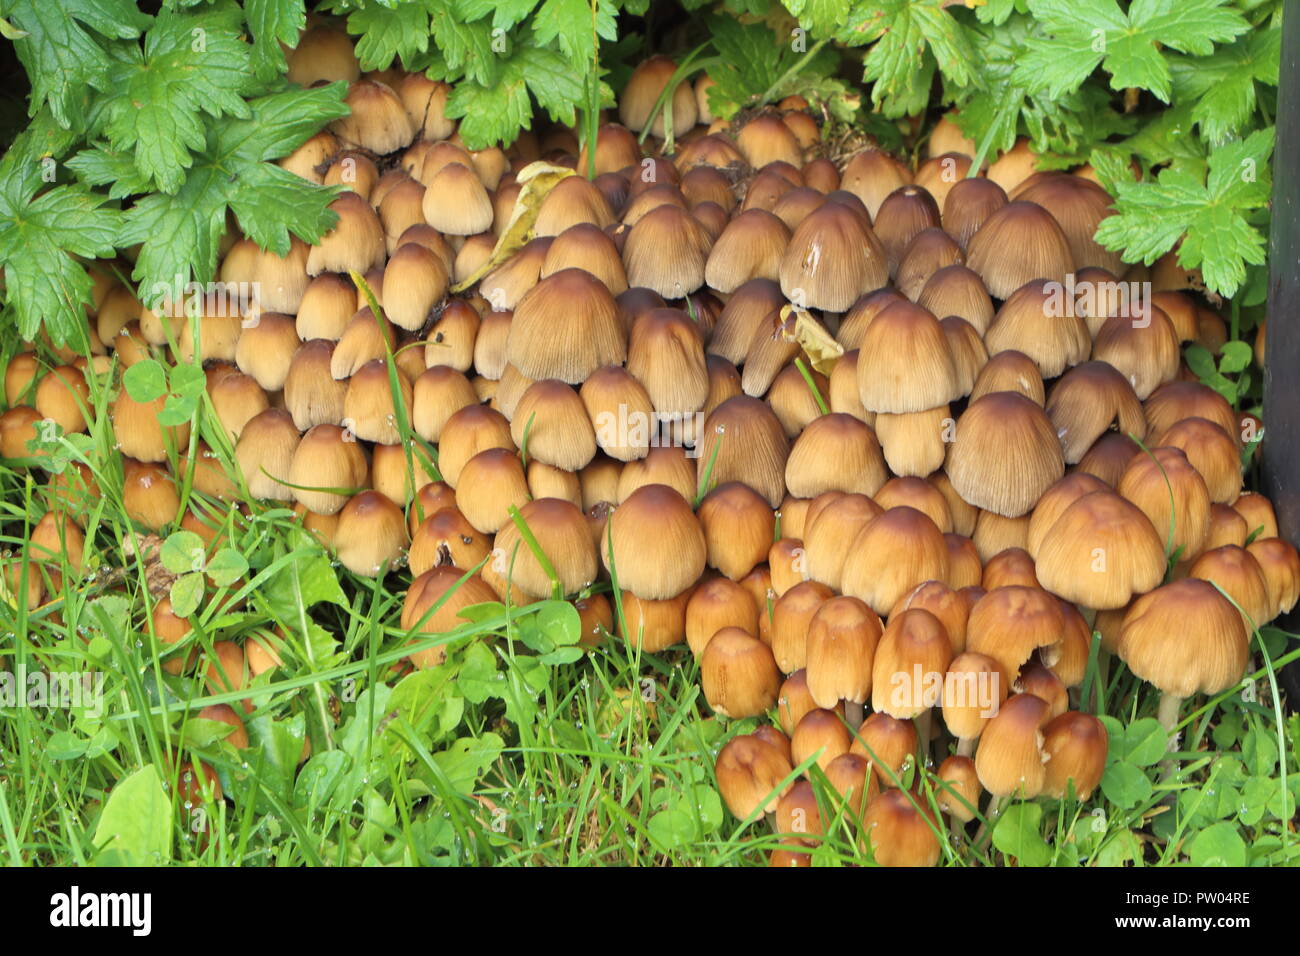 Glistening inkcap mushrooms in the grass of a garden during autumn Stock Photo